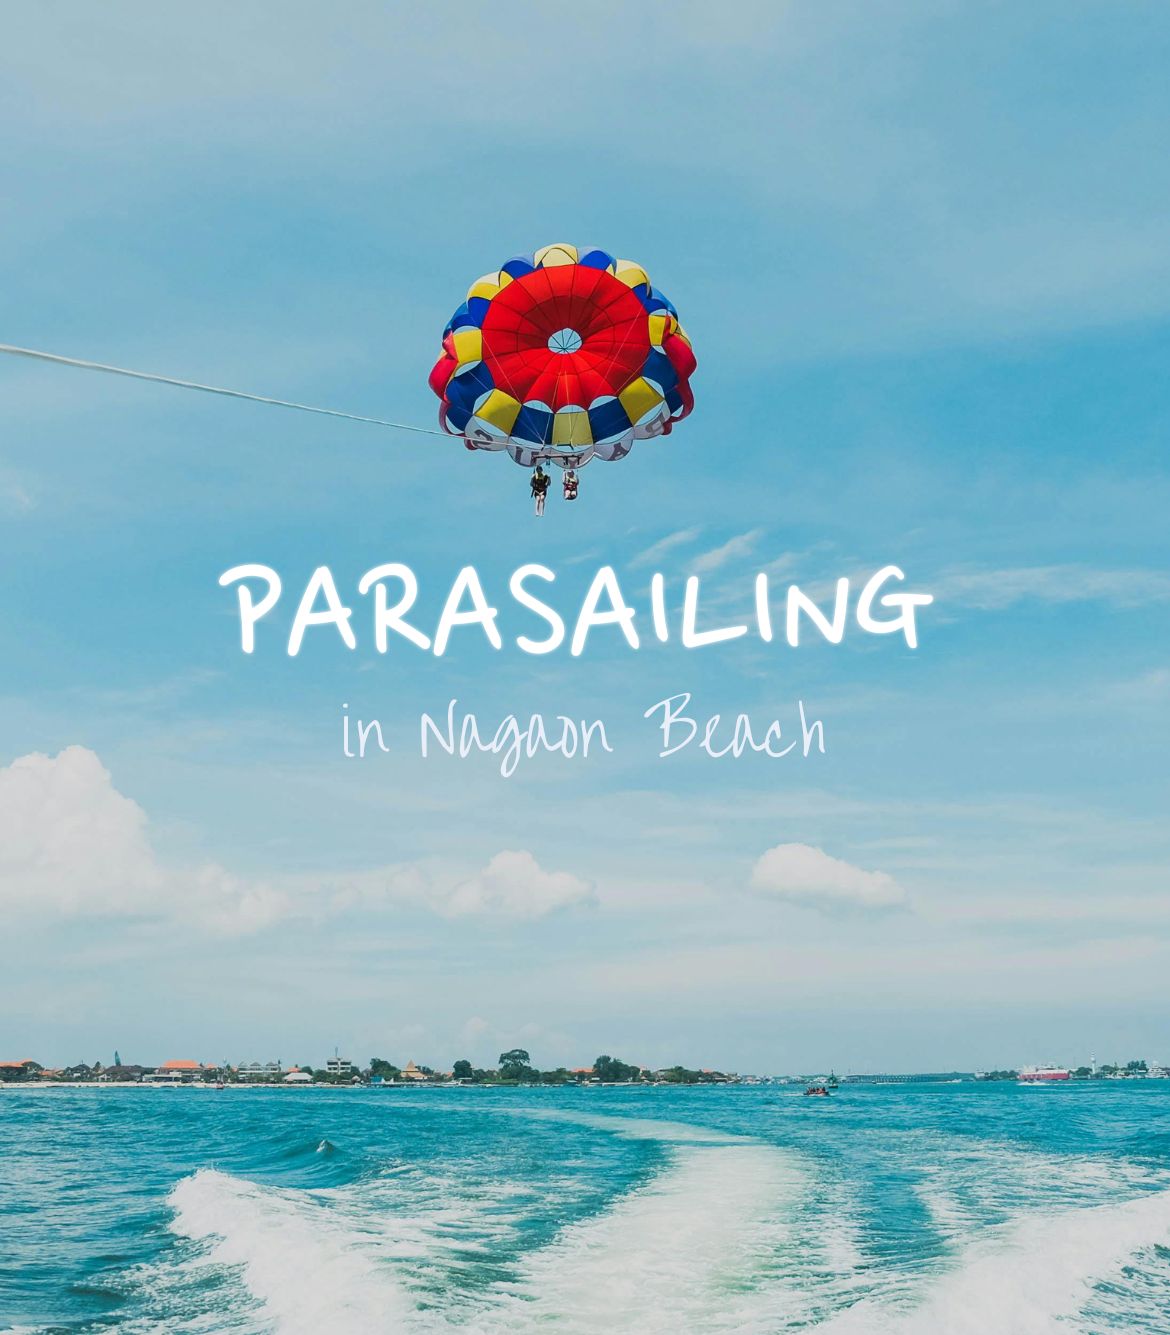 Parasailing in Nagaon Beach